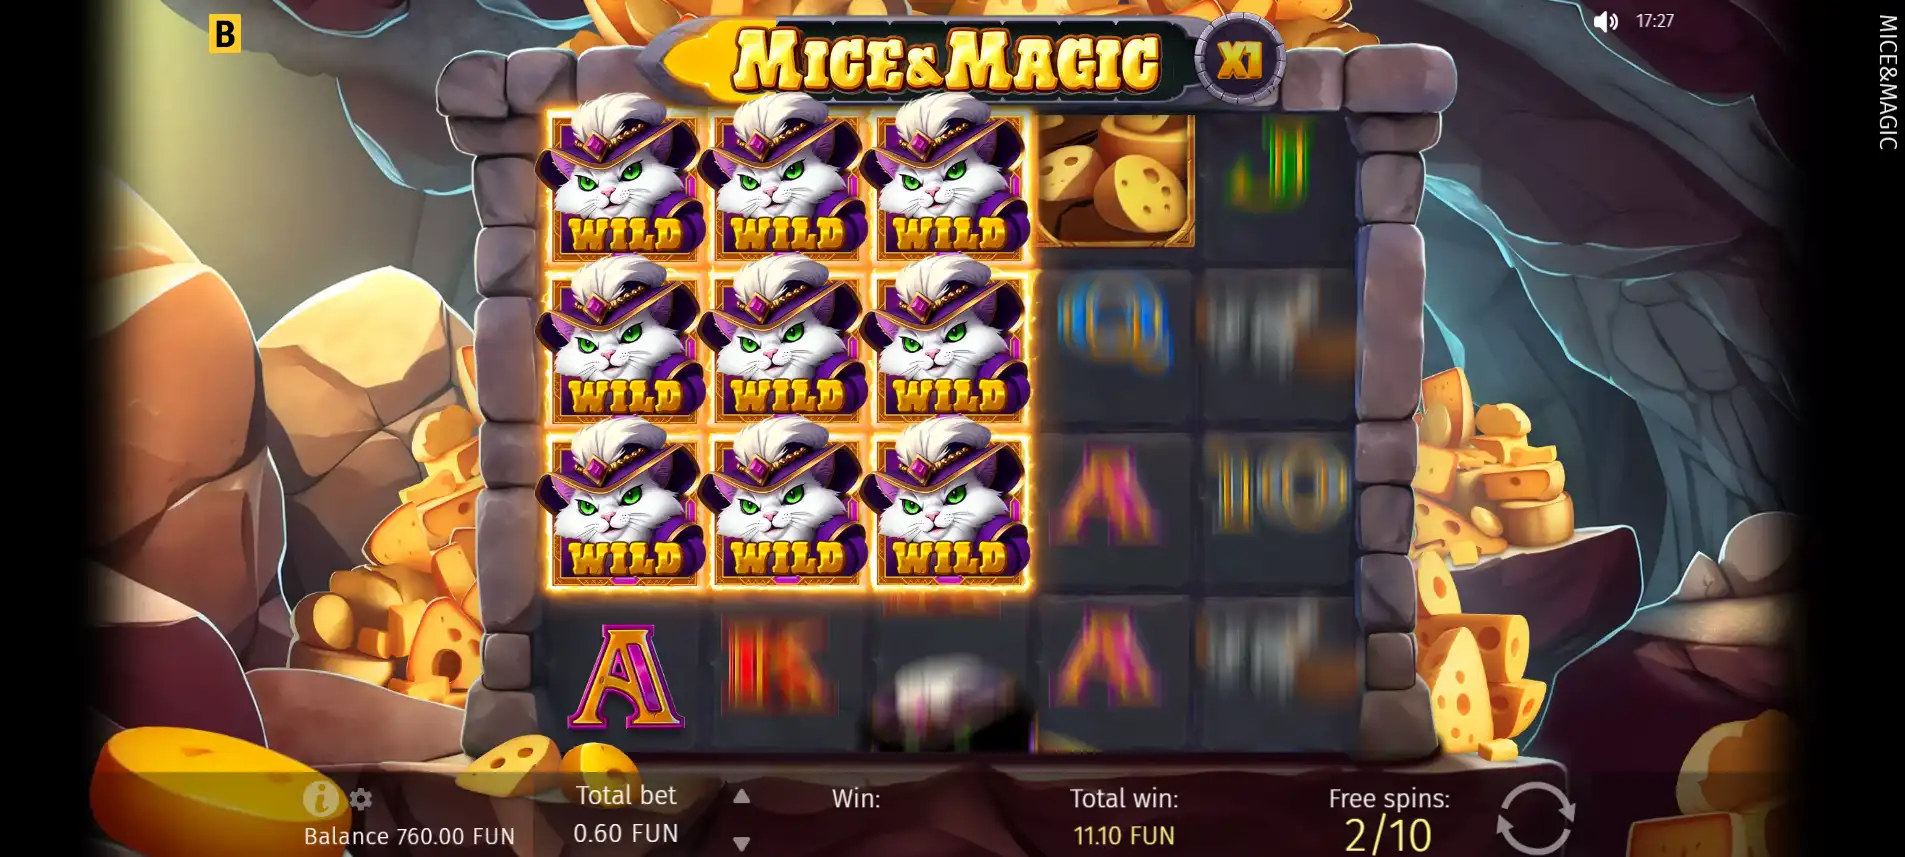 A gameplay image of bGaming's Mice & Magic Wonder Spin